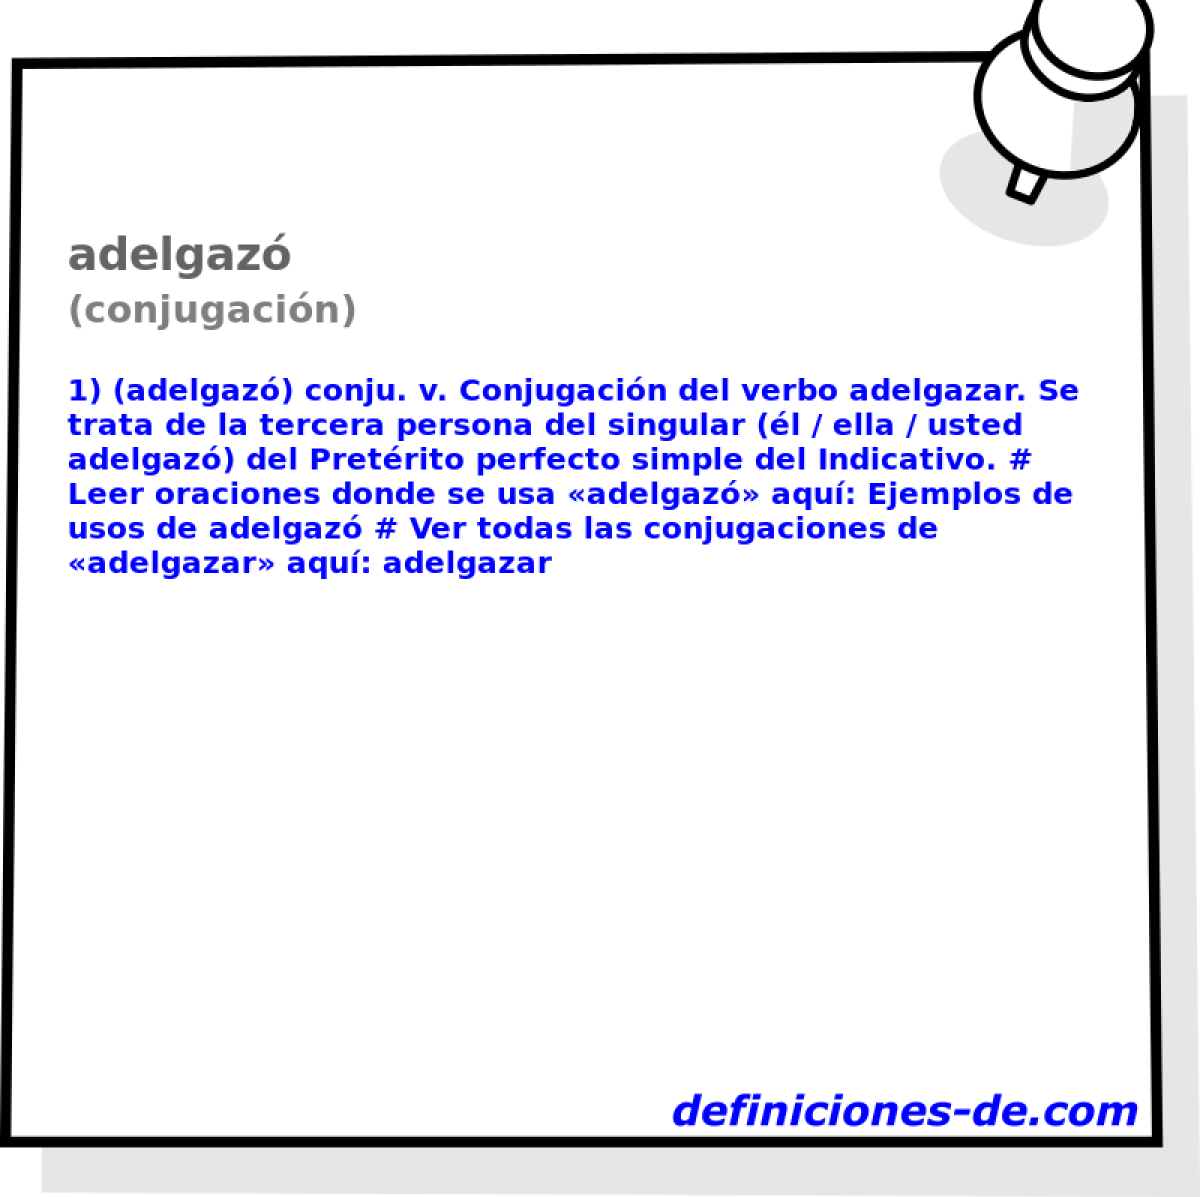 adelgaz (conjugacin)